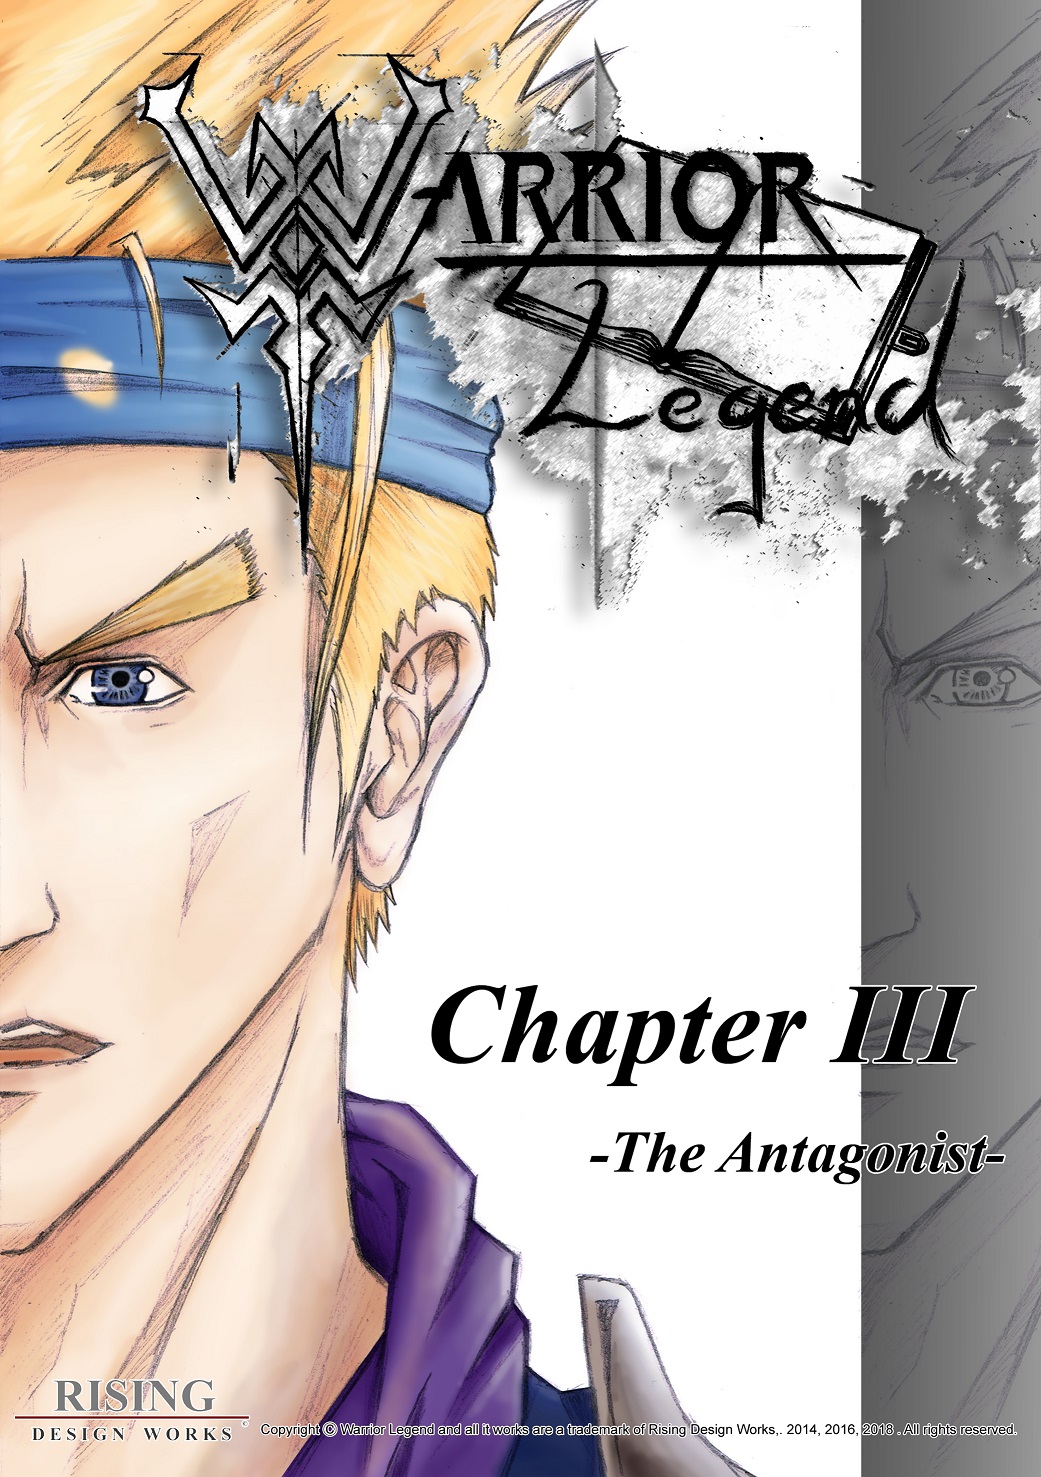 FREE: Manga: Warrior Legend Chapter III -The Antagonist- | Book Volume 3 | Manga | Comic | Drama | Action | Fantasy | Fiction | Shonen (Warrior Legend Manga series) by Action adventure shounen